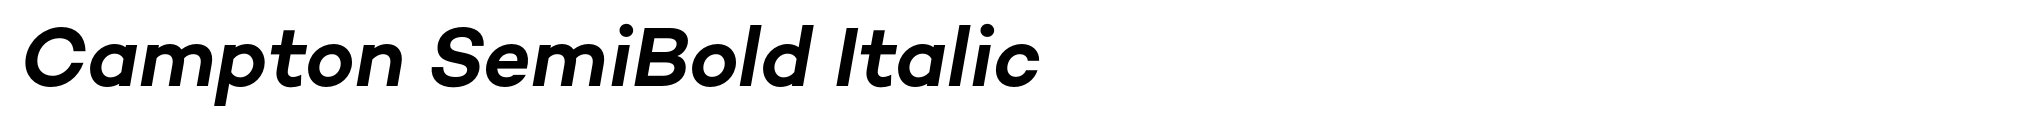 Campton SemiBold Italic image